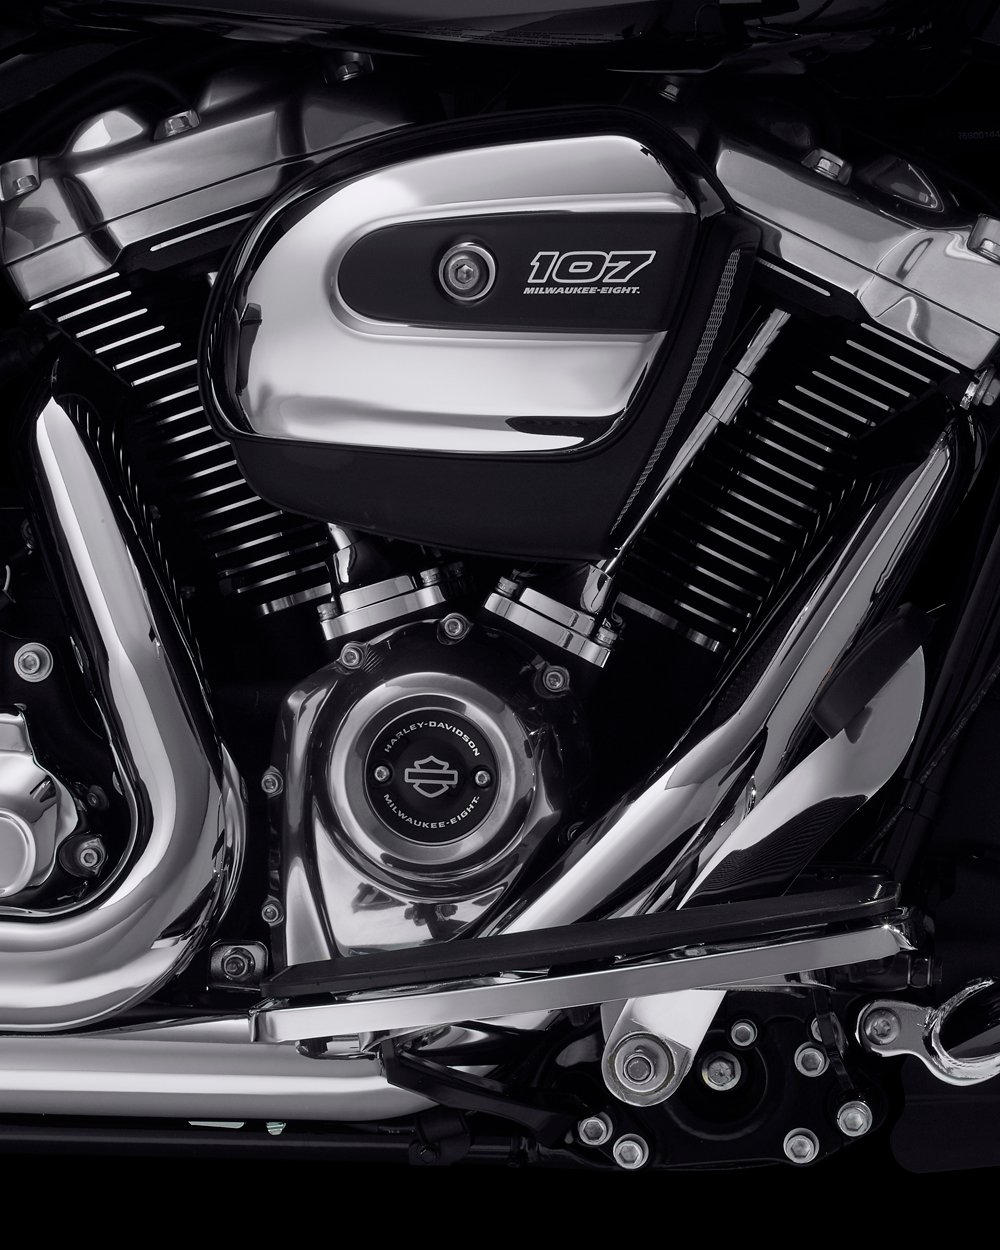 2022 Electra Glide Standard Motorcycle Milwaukee-Eight big twin Engine